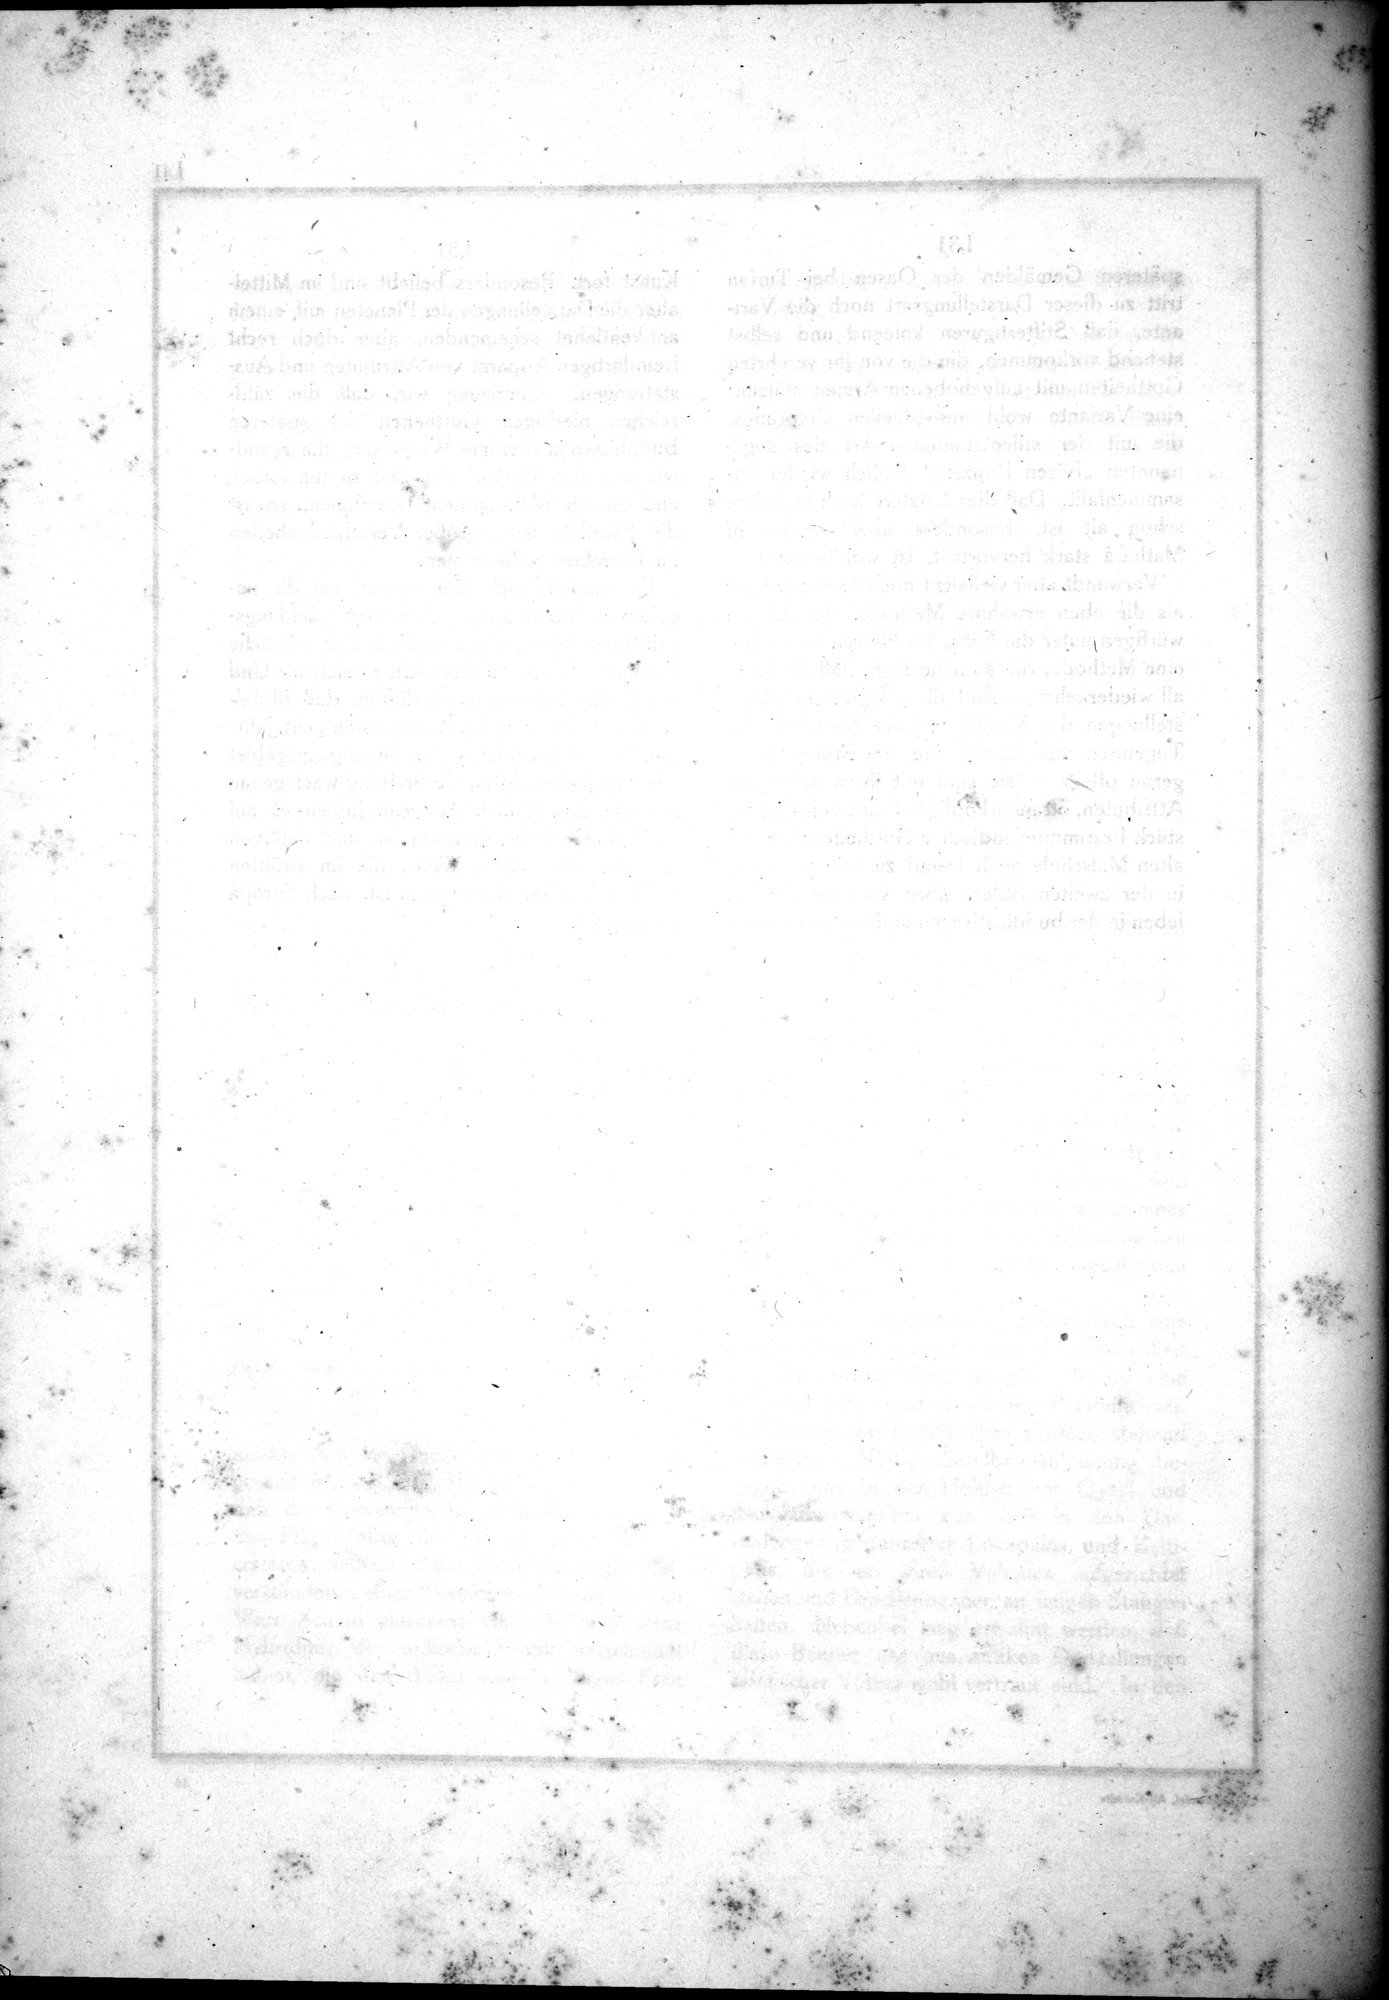 Alt-Kutscha : vol.1 / Page 54 (Grayscale High Resolution Image)